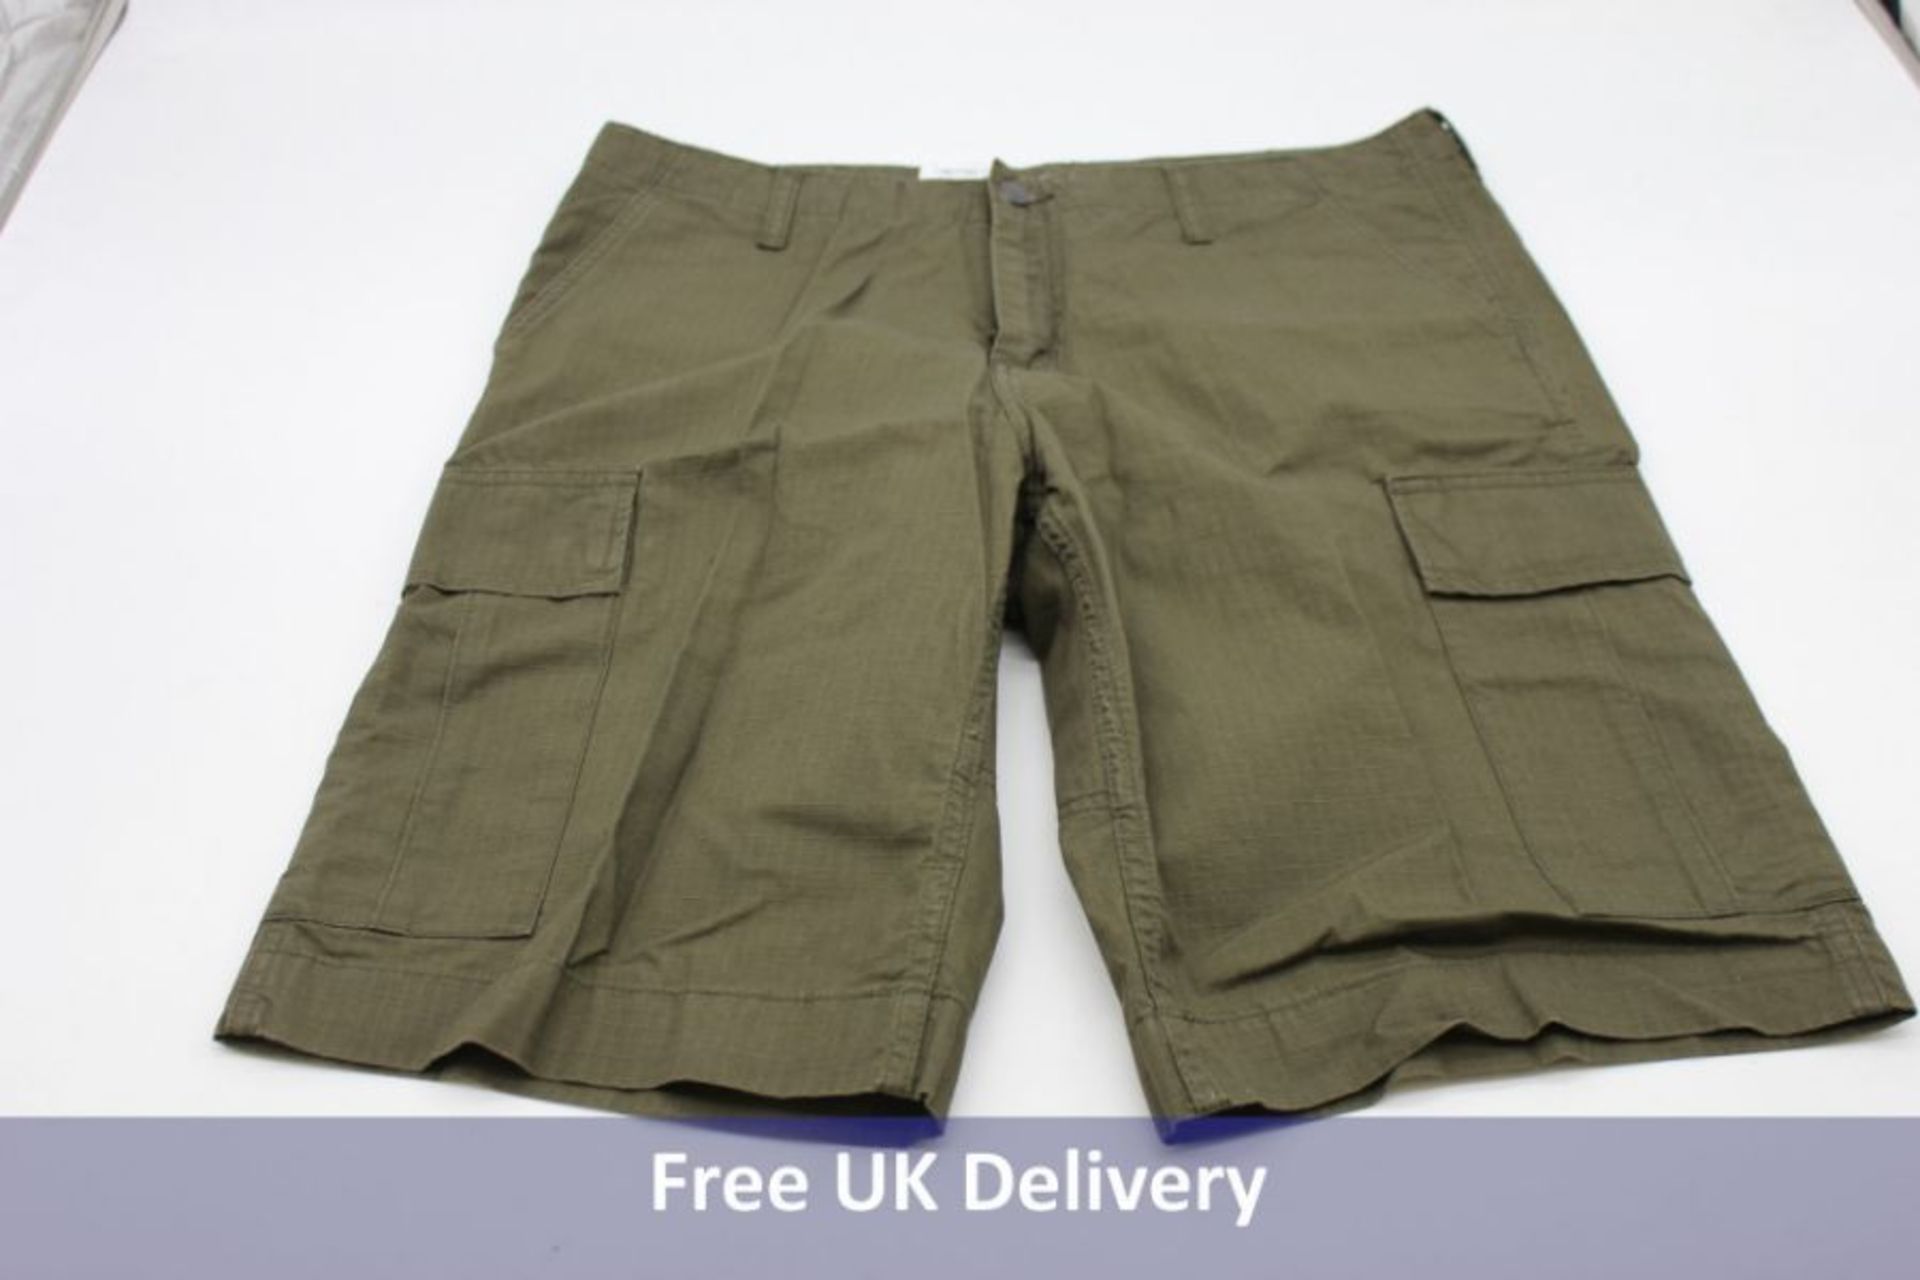 Three Carhartt items to include 1x Regular Cargo Shorts, UK 33, 1x Carhartt S/S Stoneage T-Shirt Bla